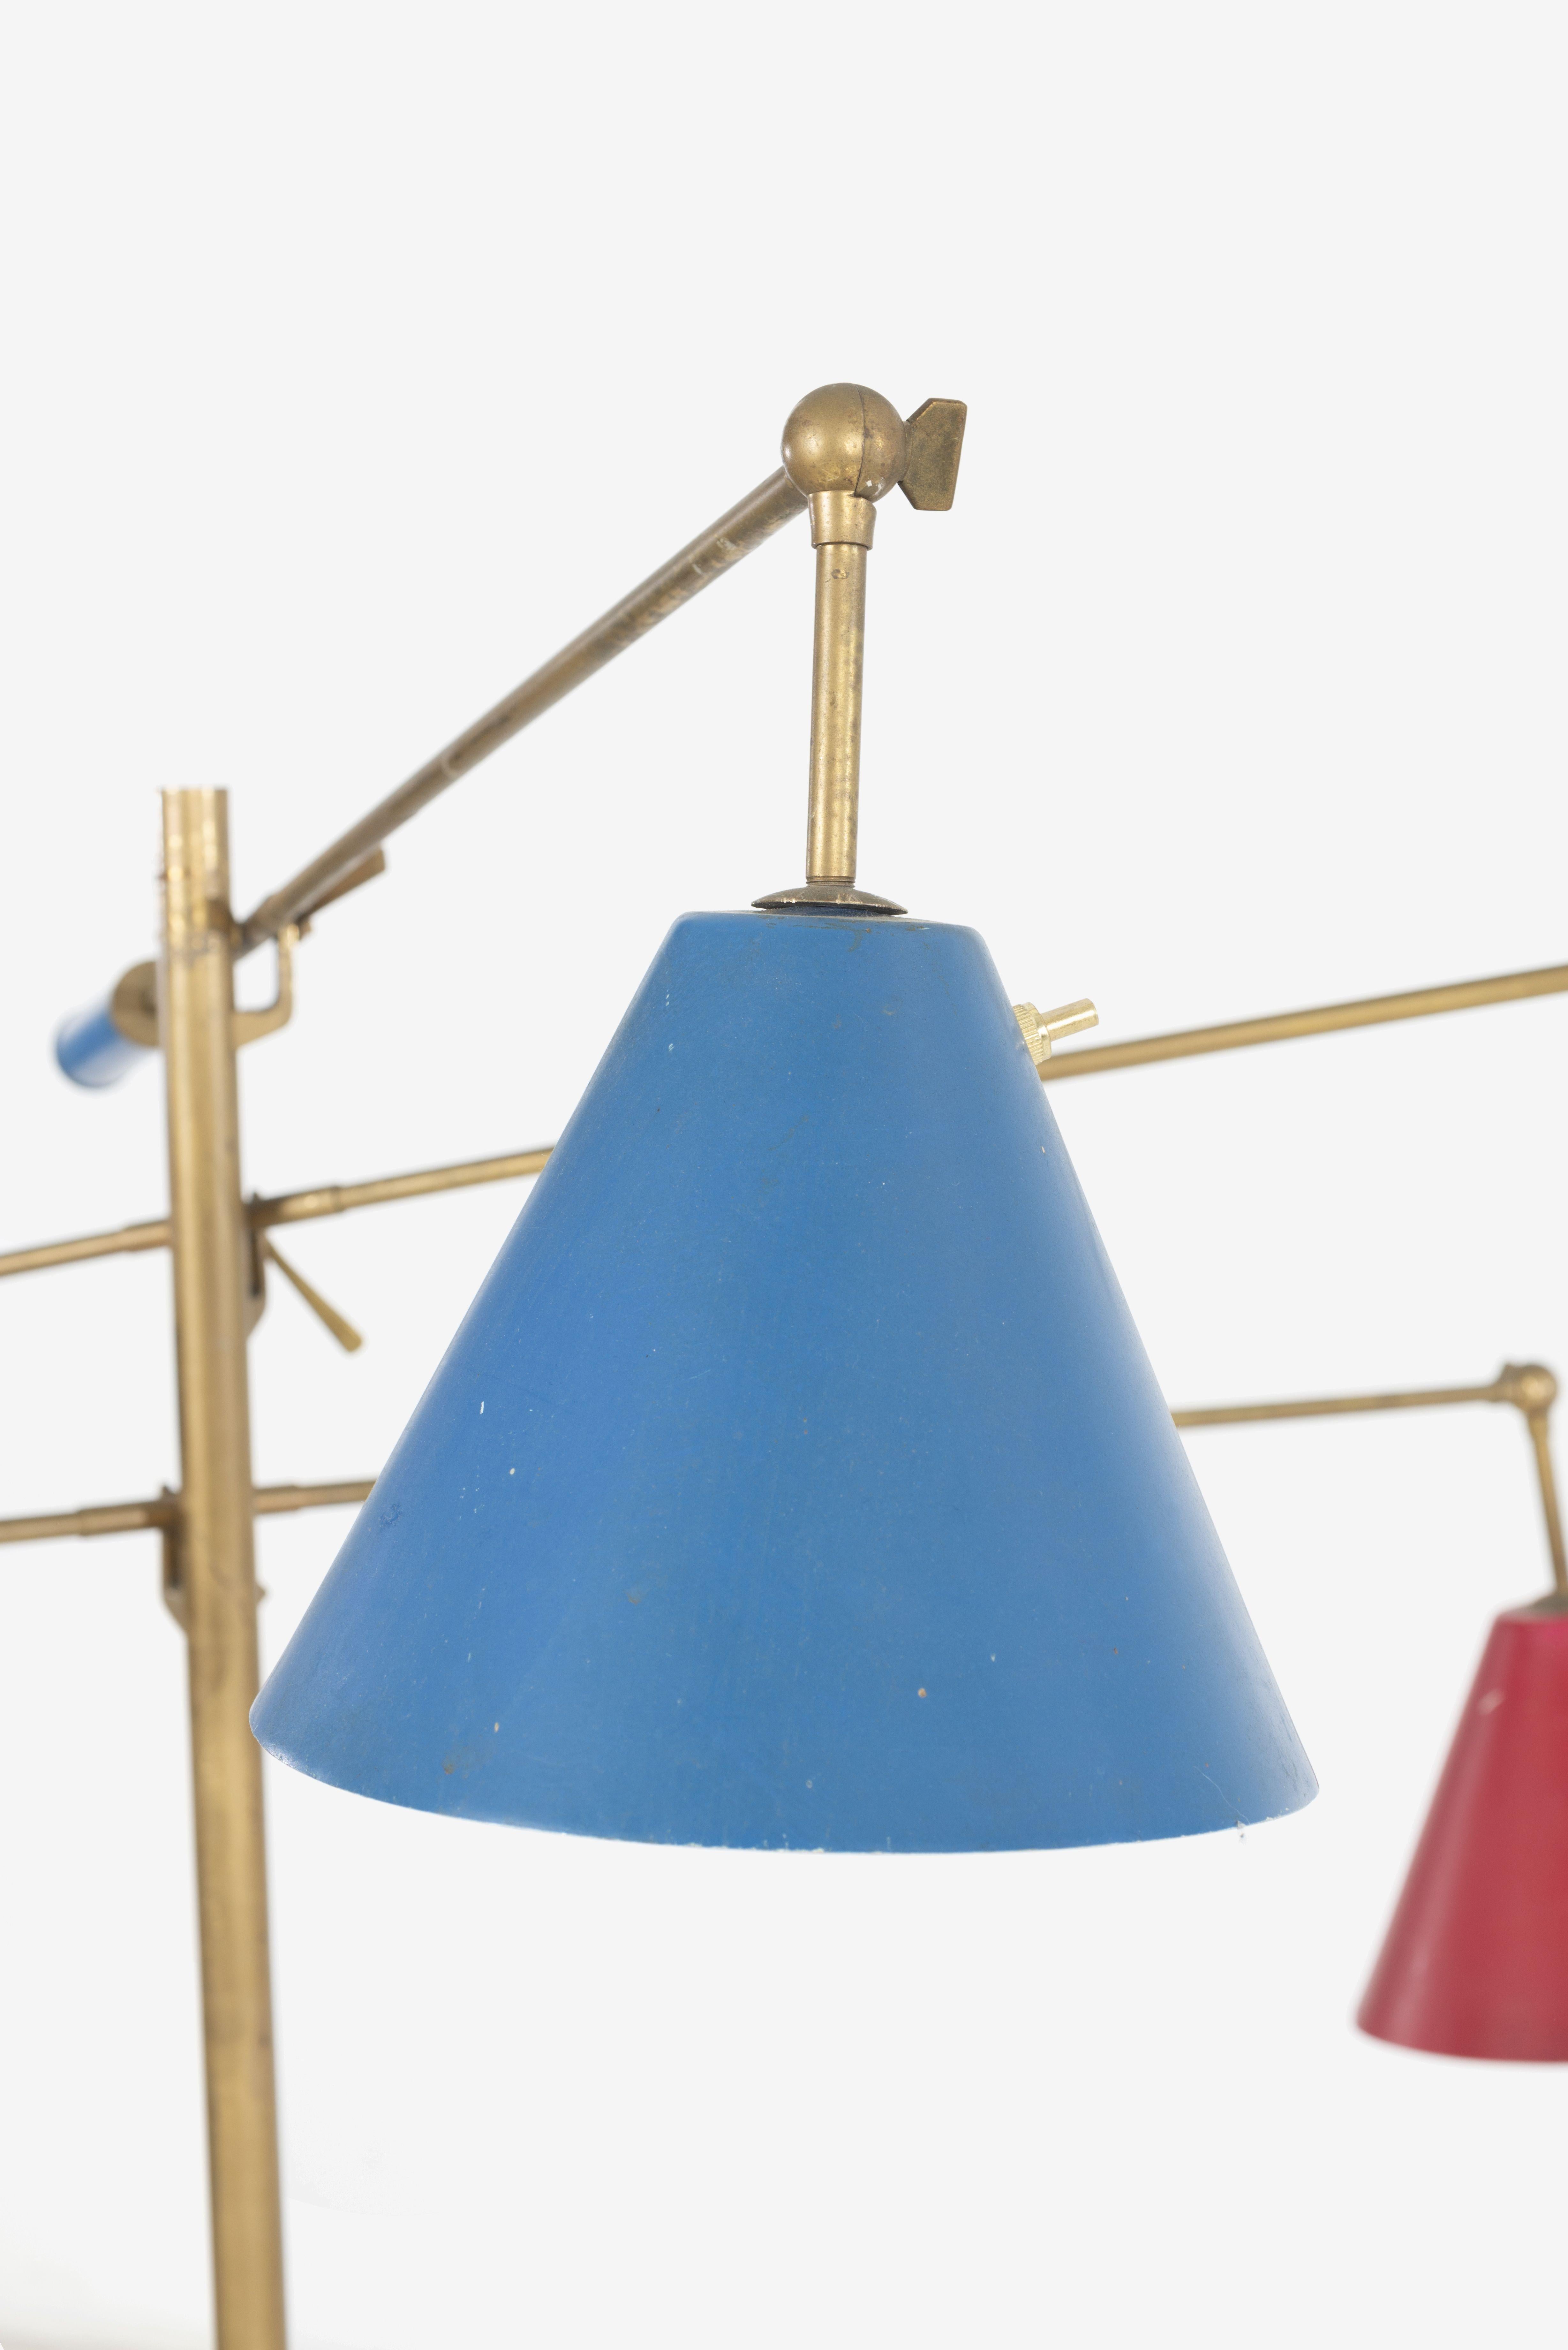 Angelo Lelii for Arredoluce, Triennale Floor Lamp, Model 12128 6